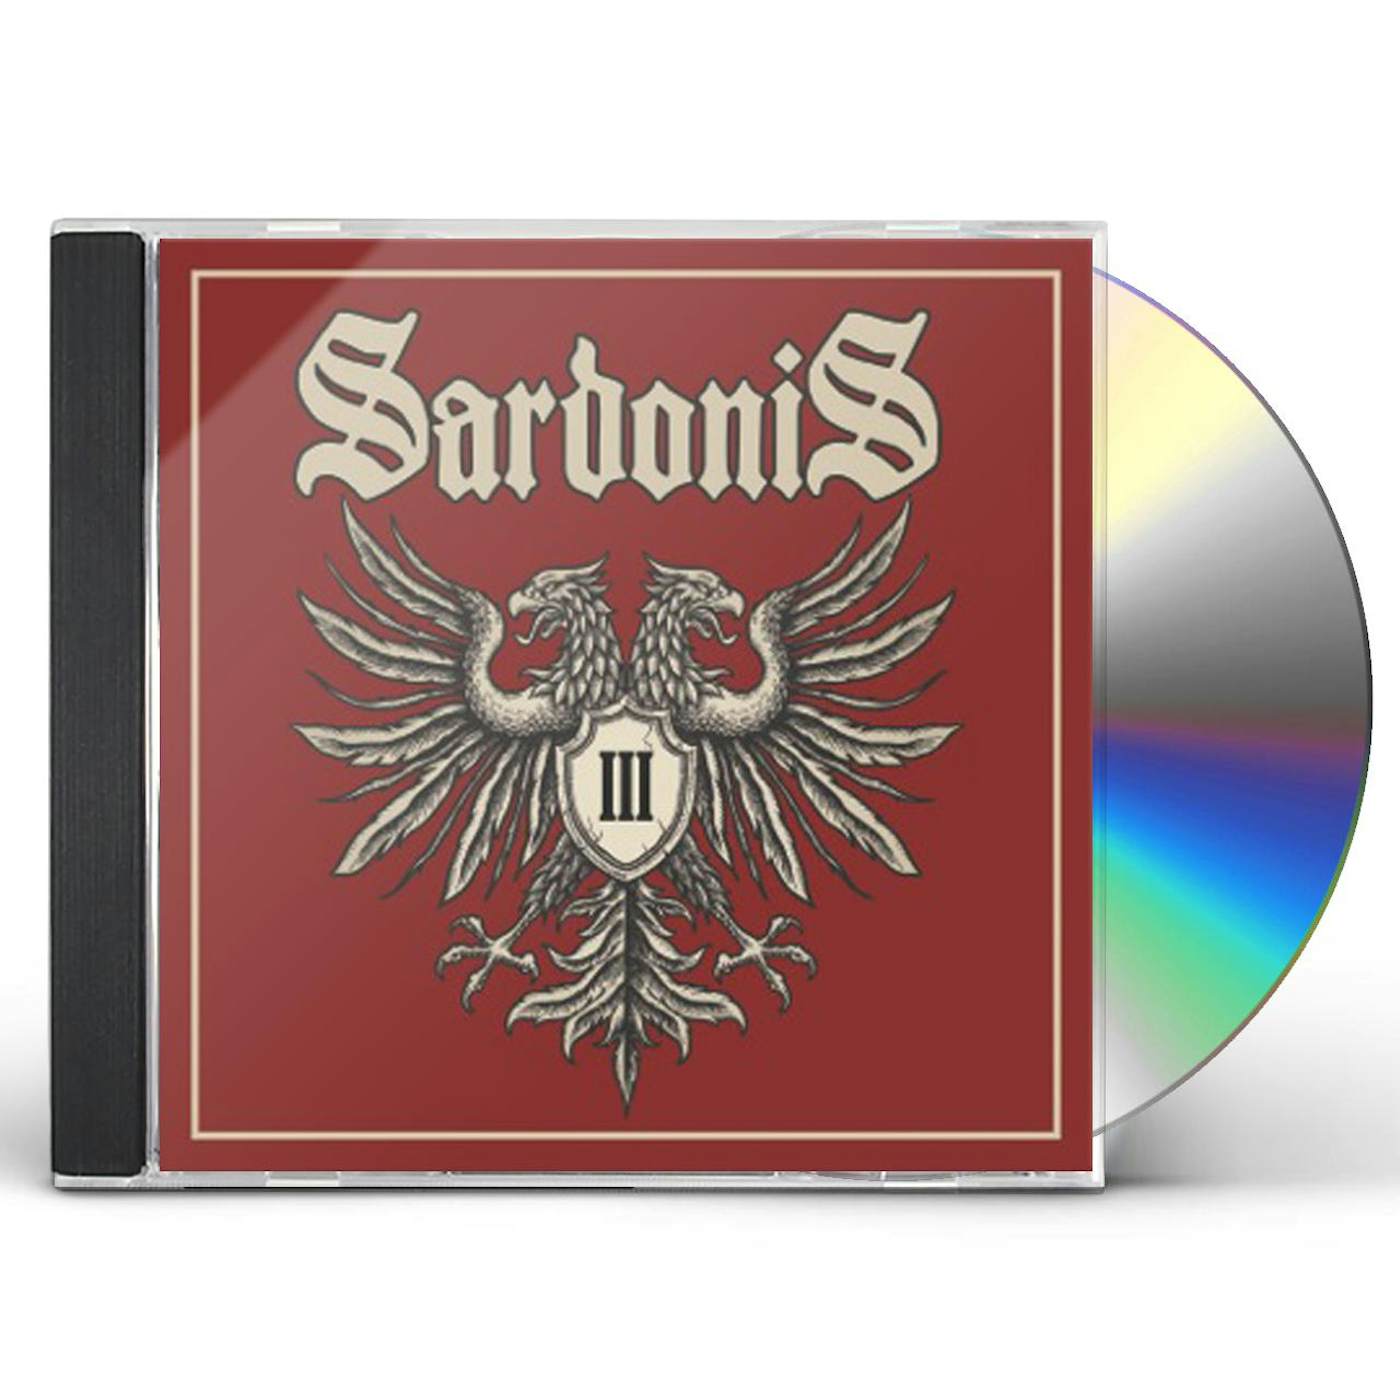 SardoniS III CD